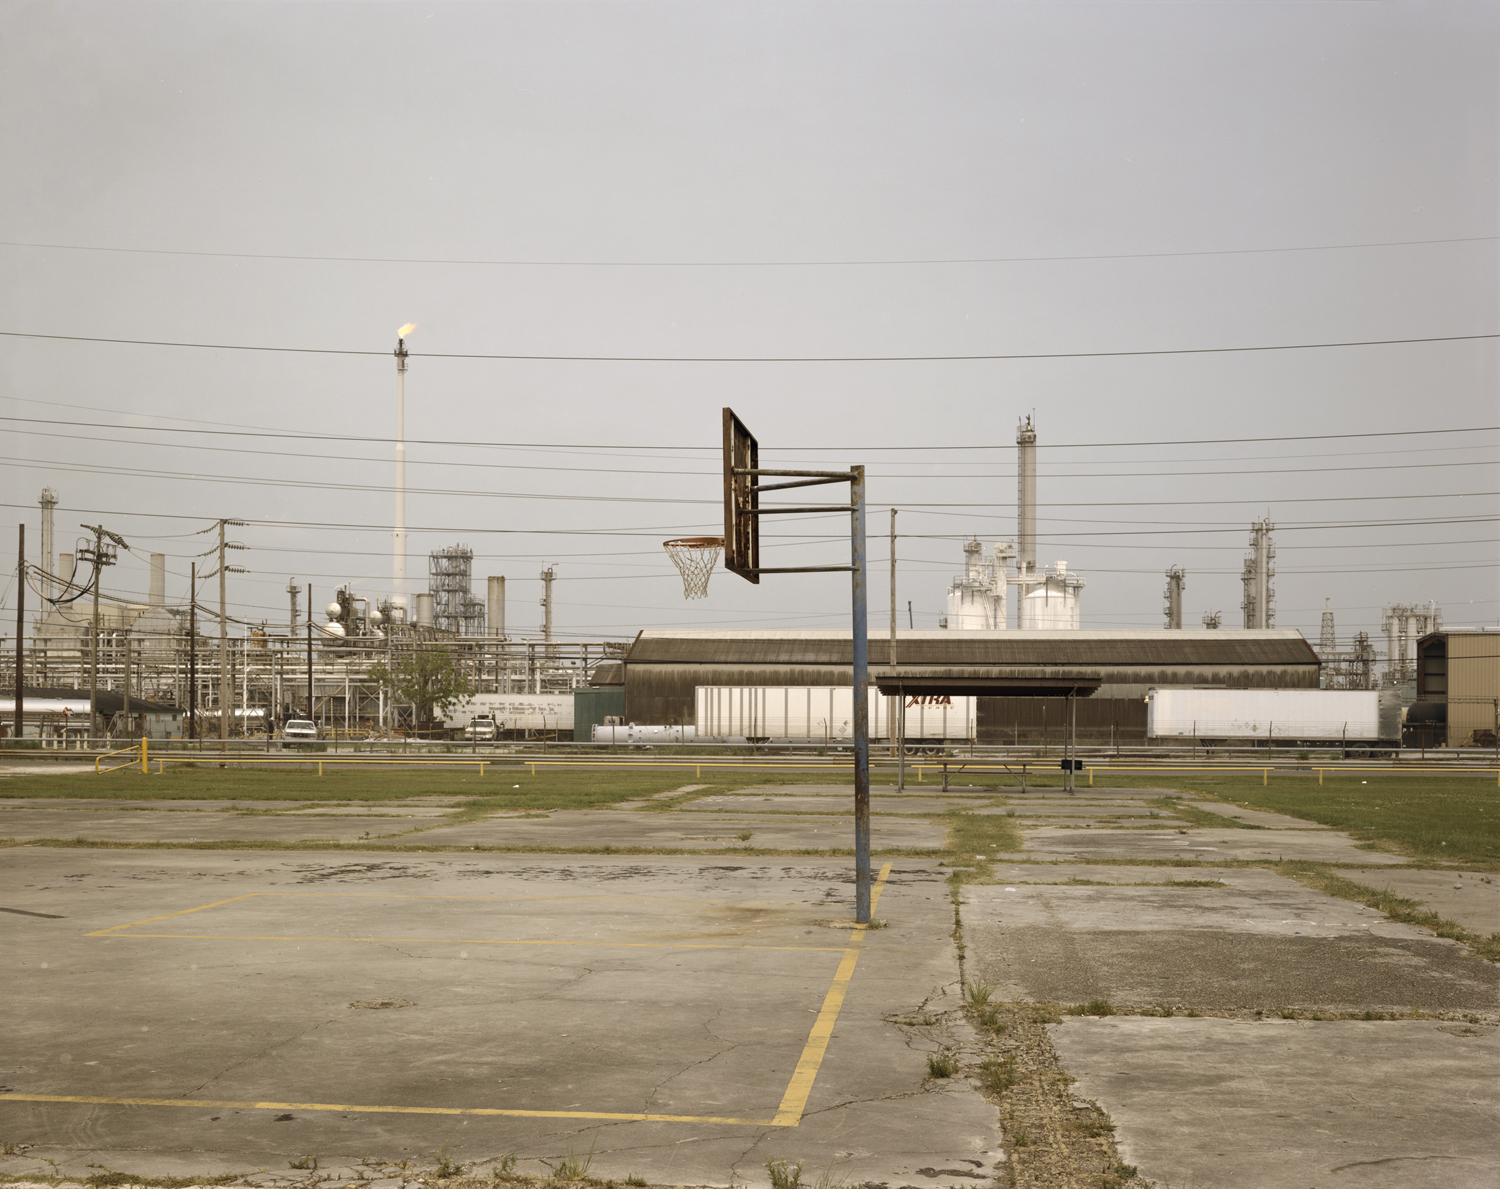 Playground and Shell Refinery, Norco, Louisiana, 1998